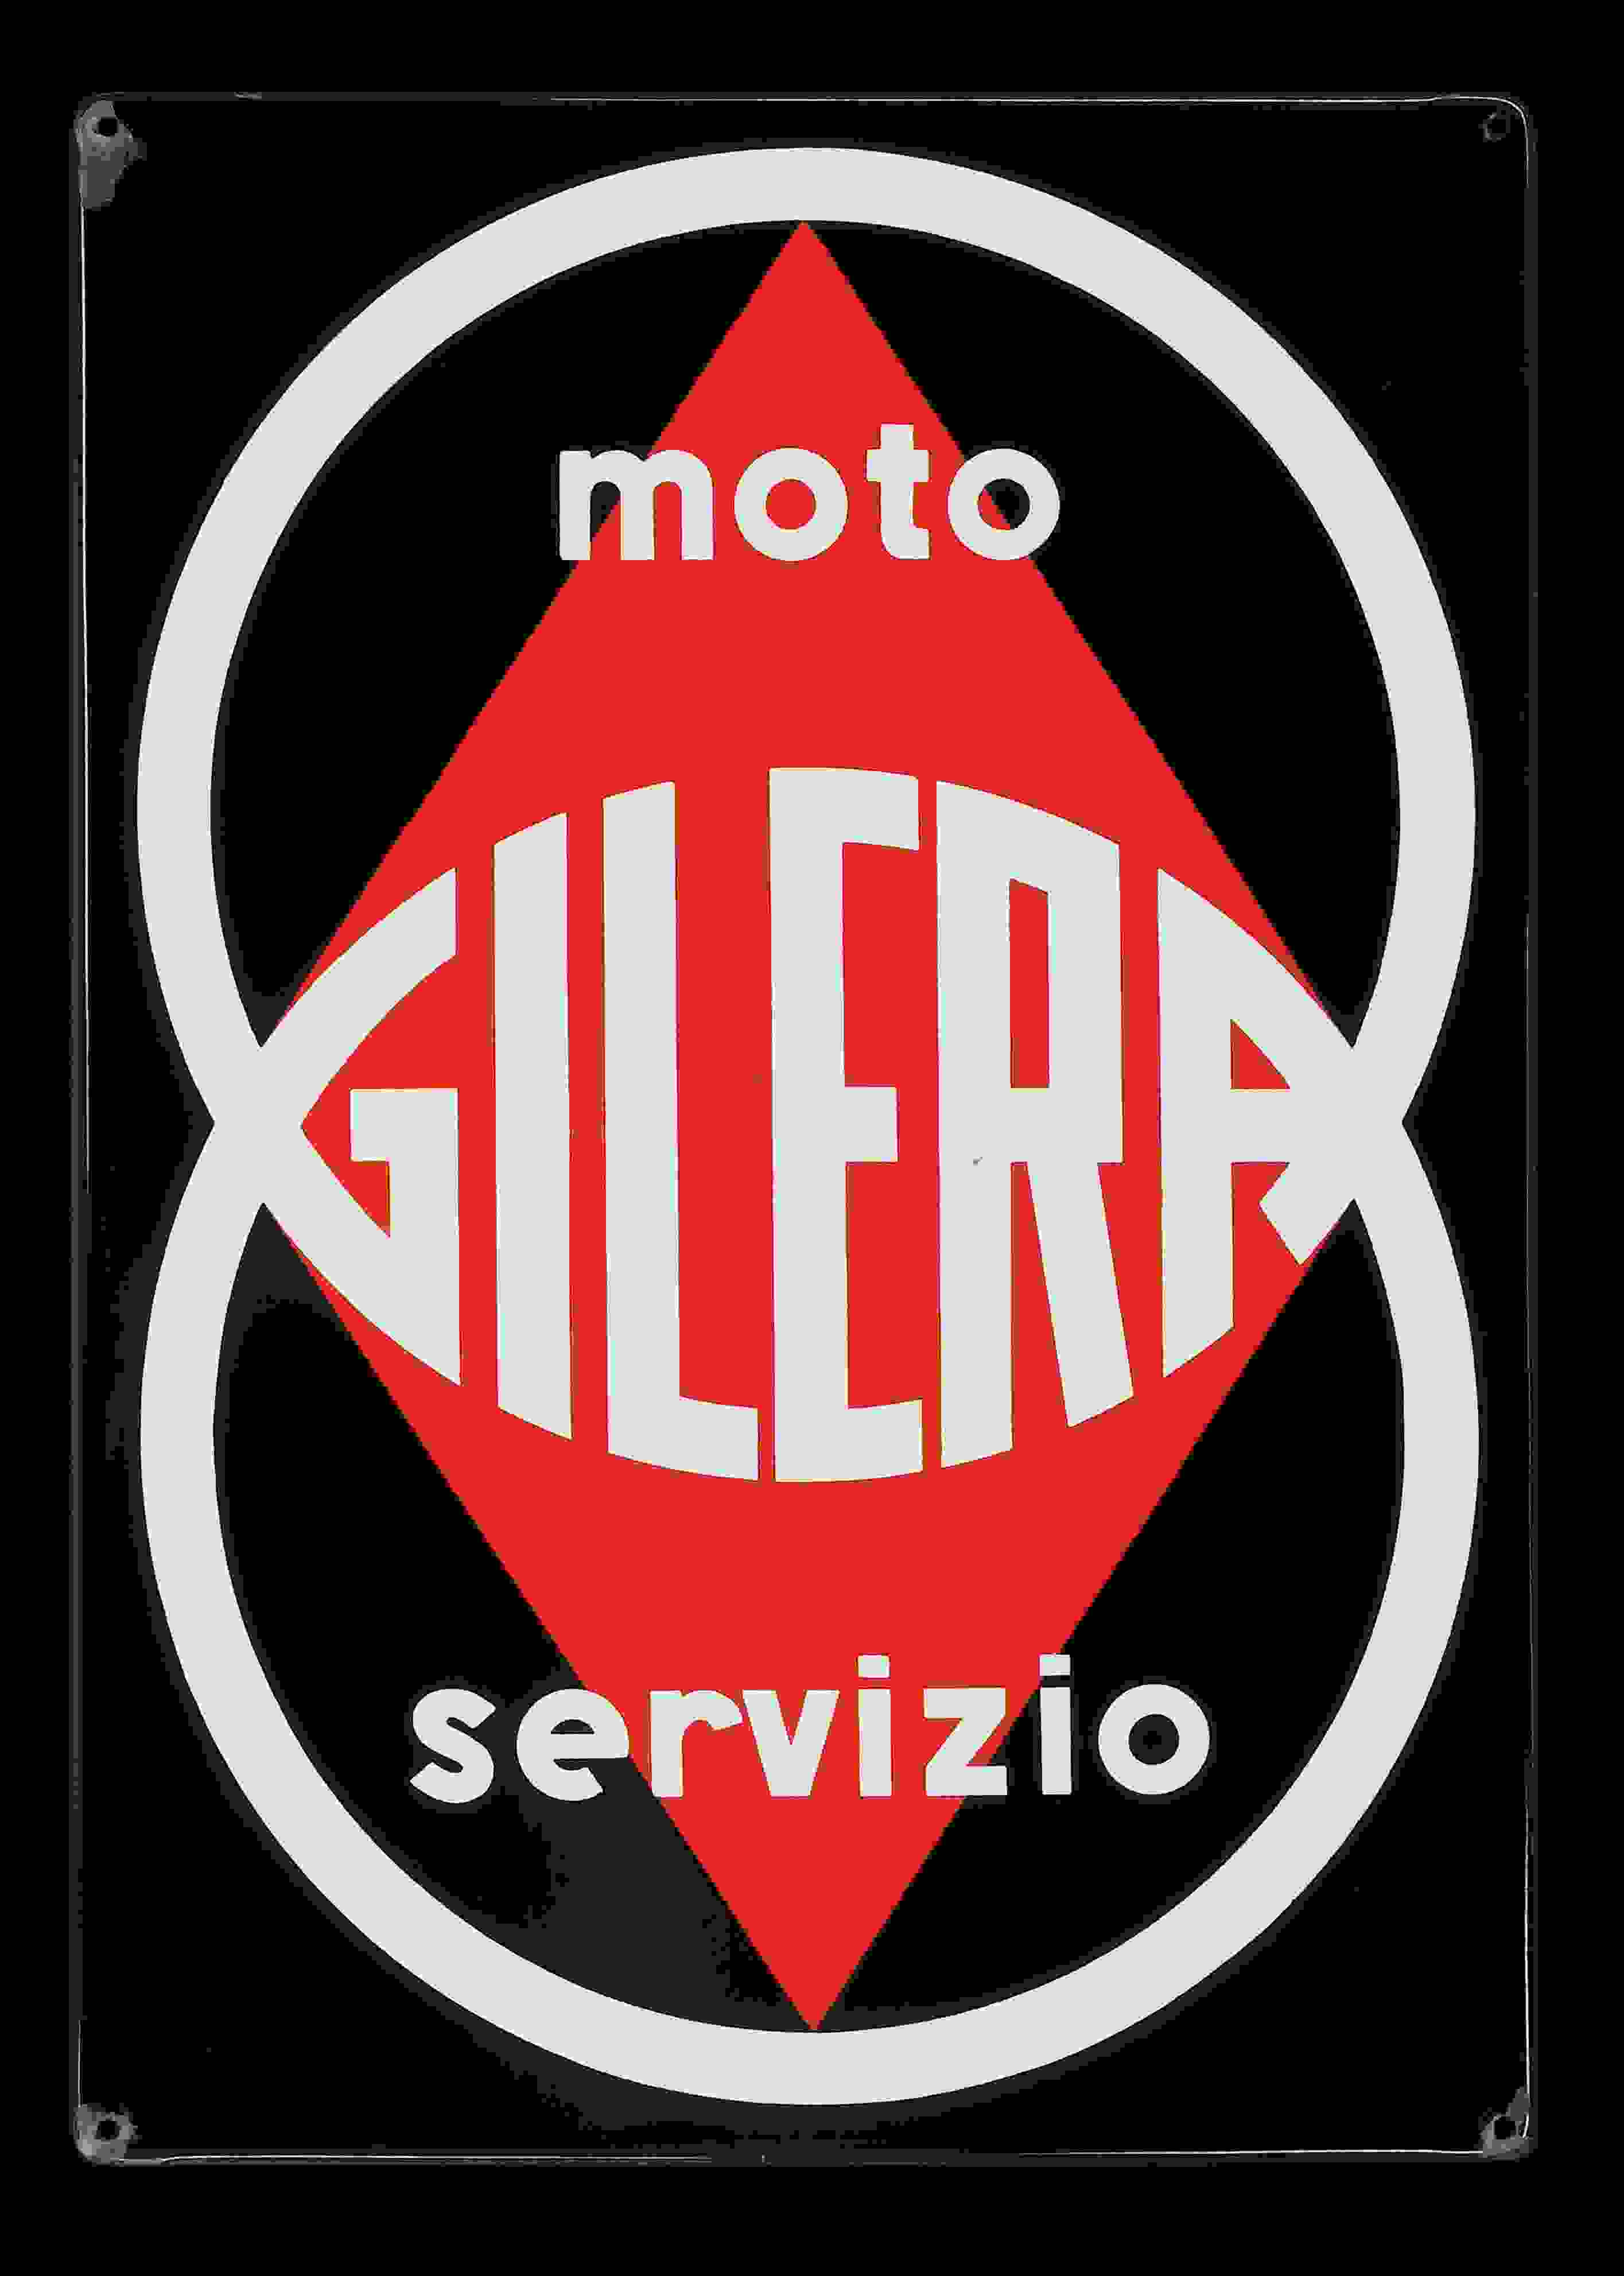 Moto Gilera Servicio 